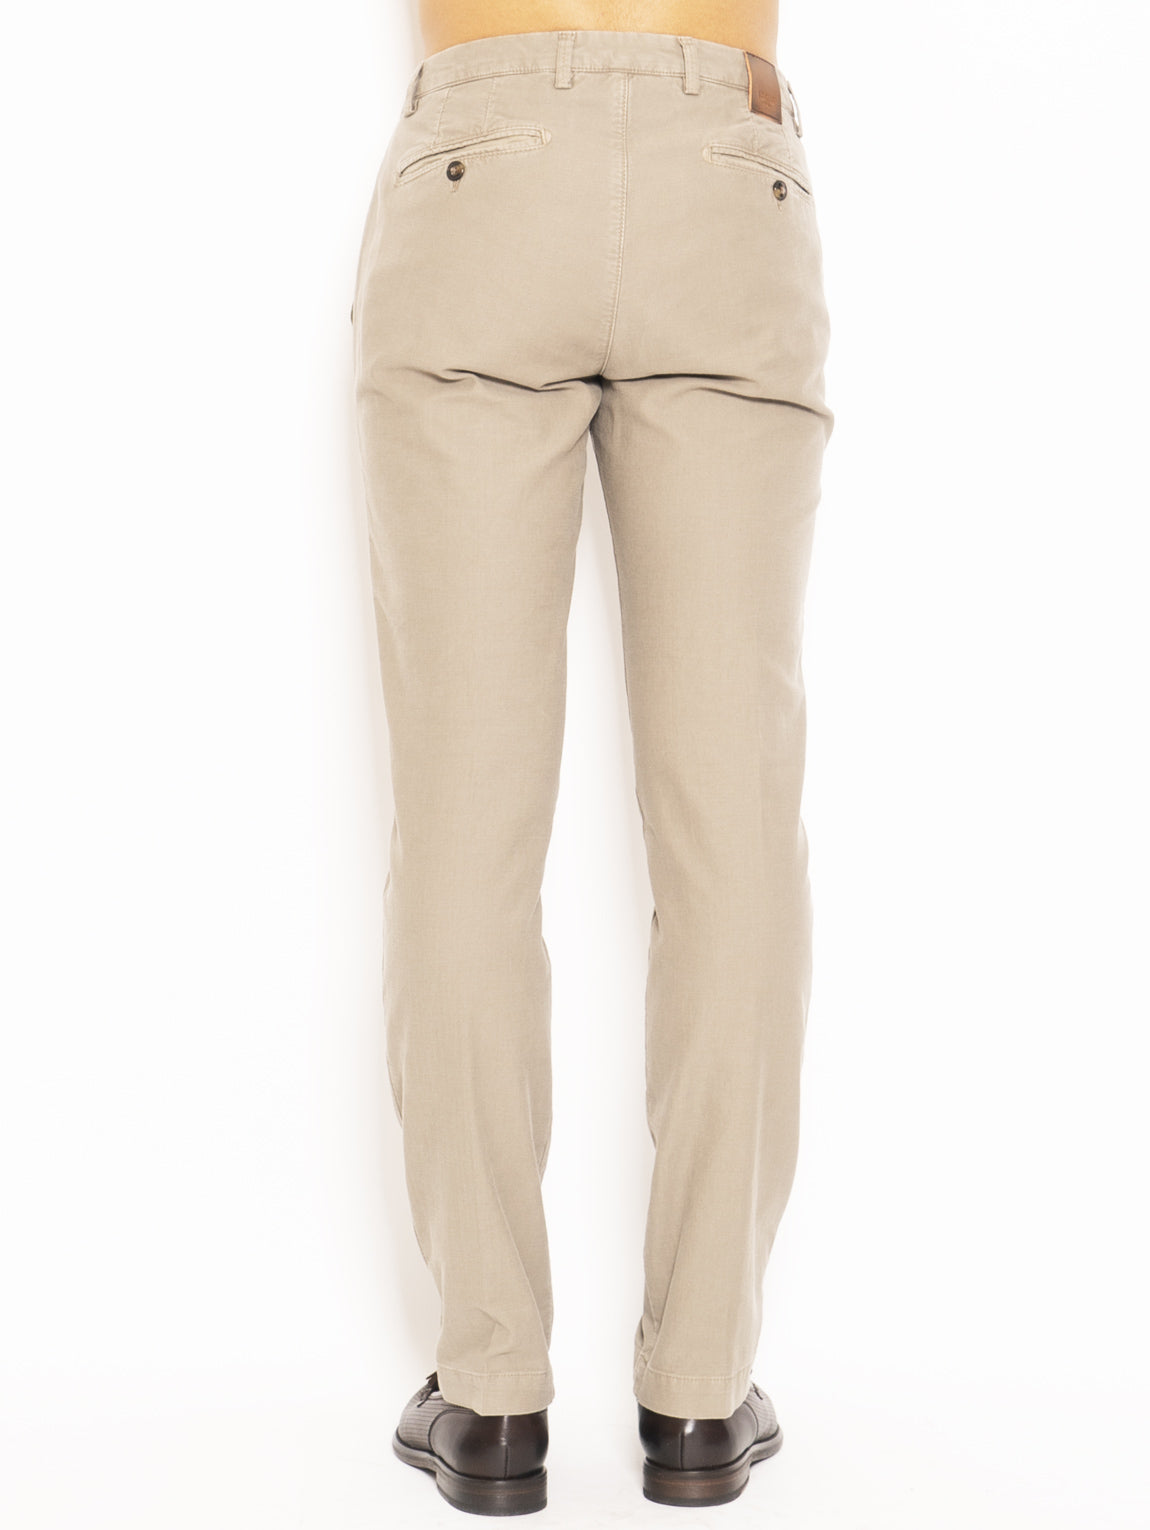 Chino trousers in Beige Cotton Gabardine